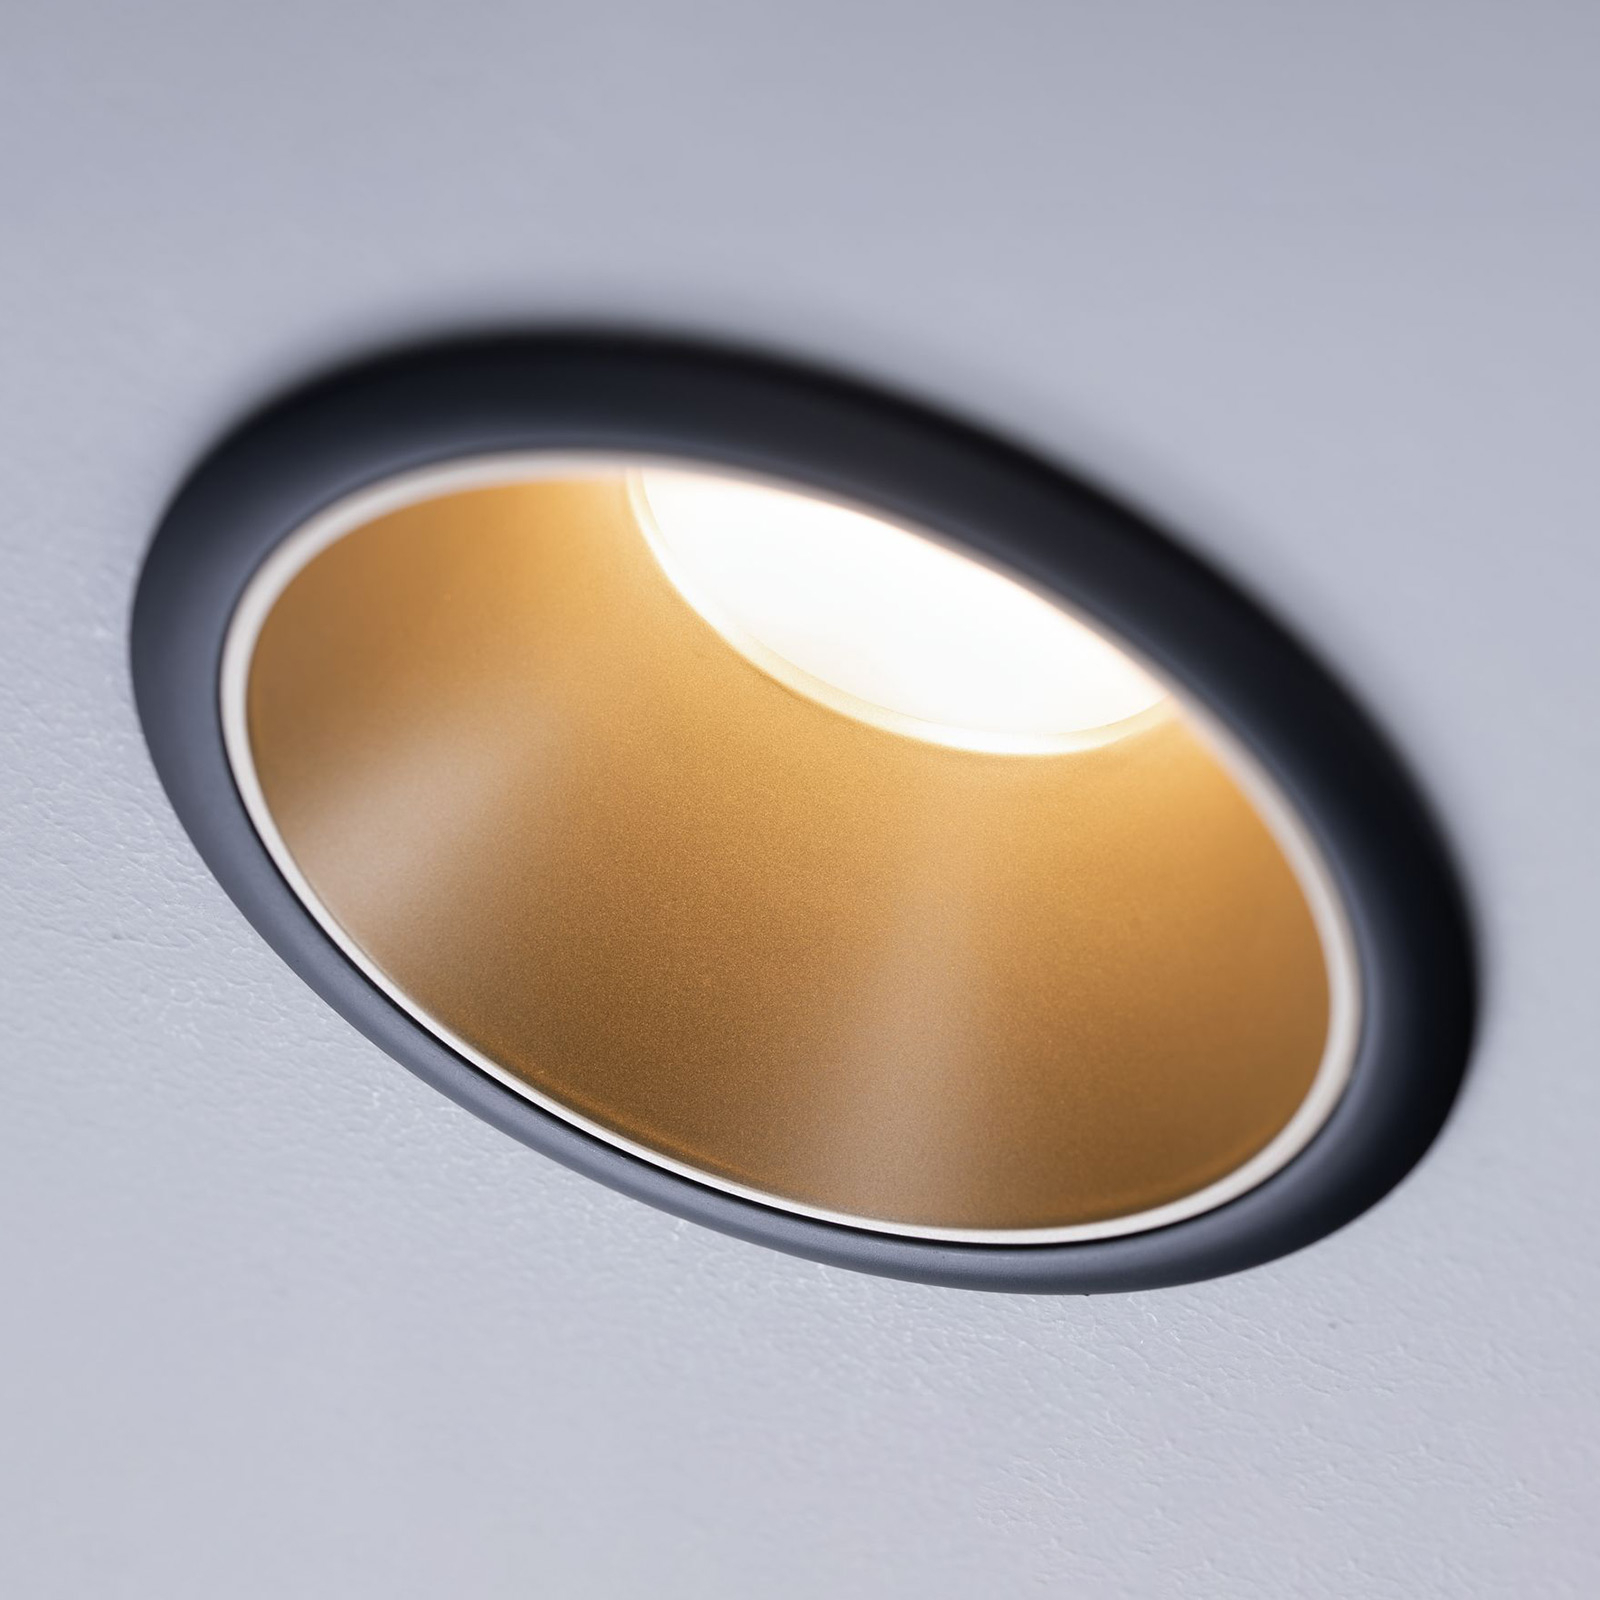 Paulmann Cole spotlight LED, dorado-negro